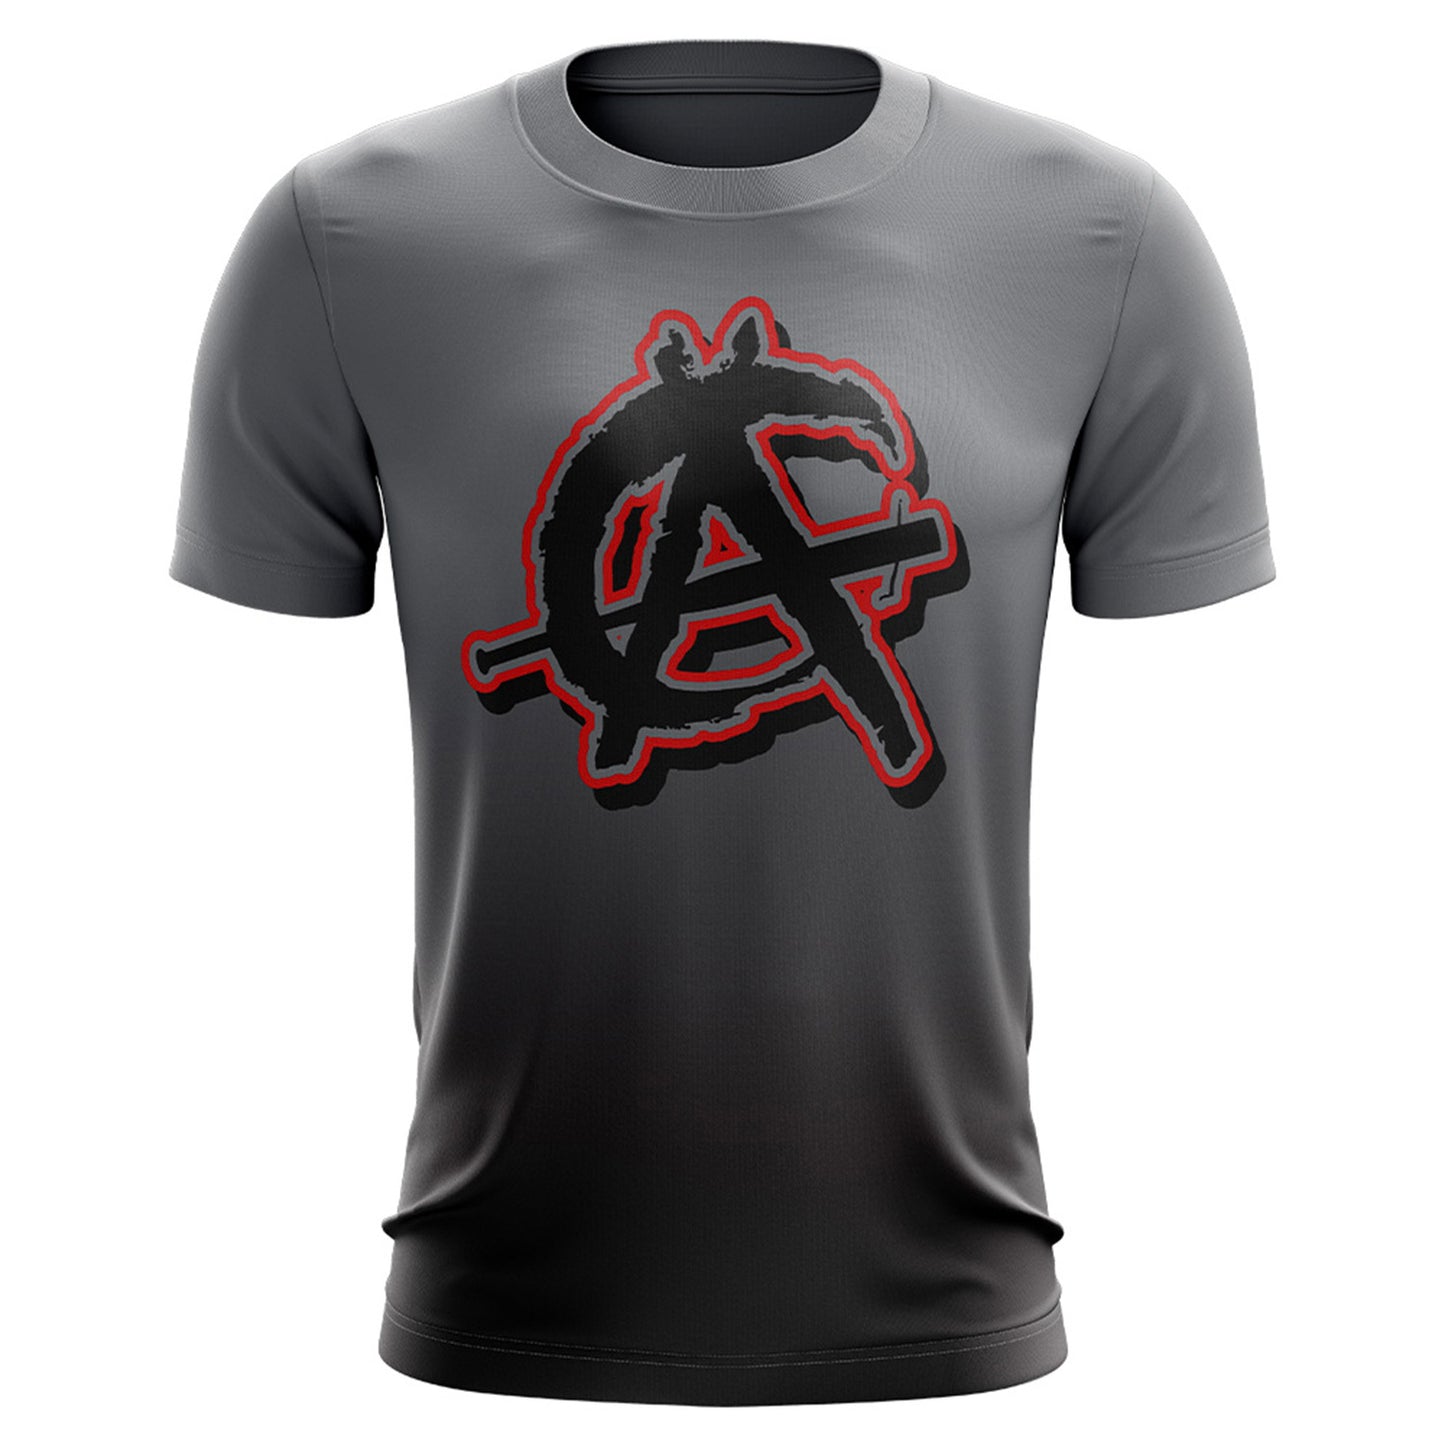 Anarchy Bat Company Short Sleeve Shirt - Fade (Charcoal/Black)